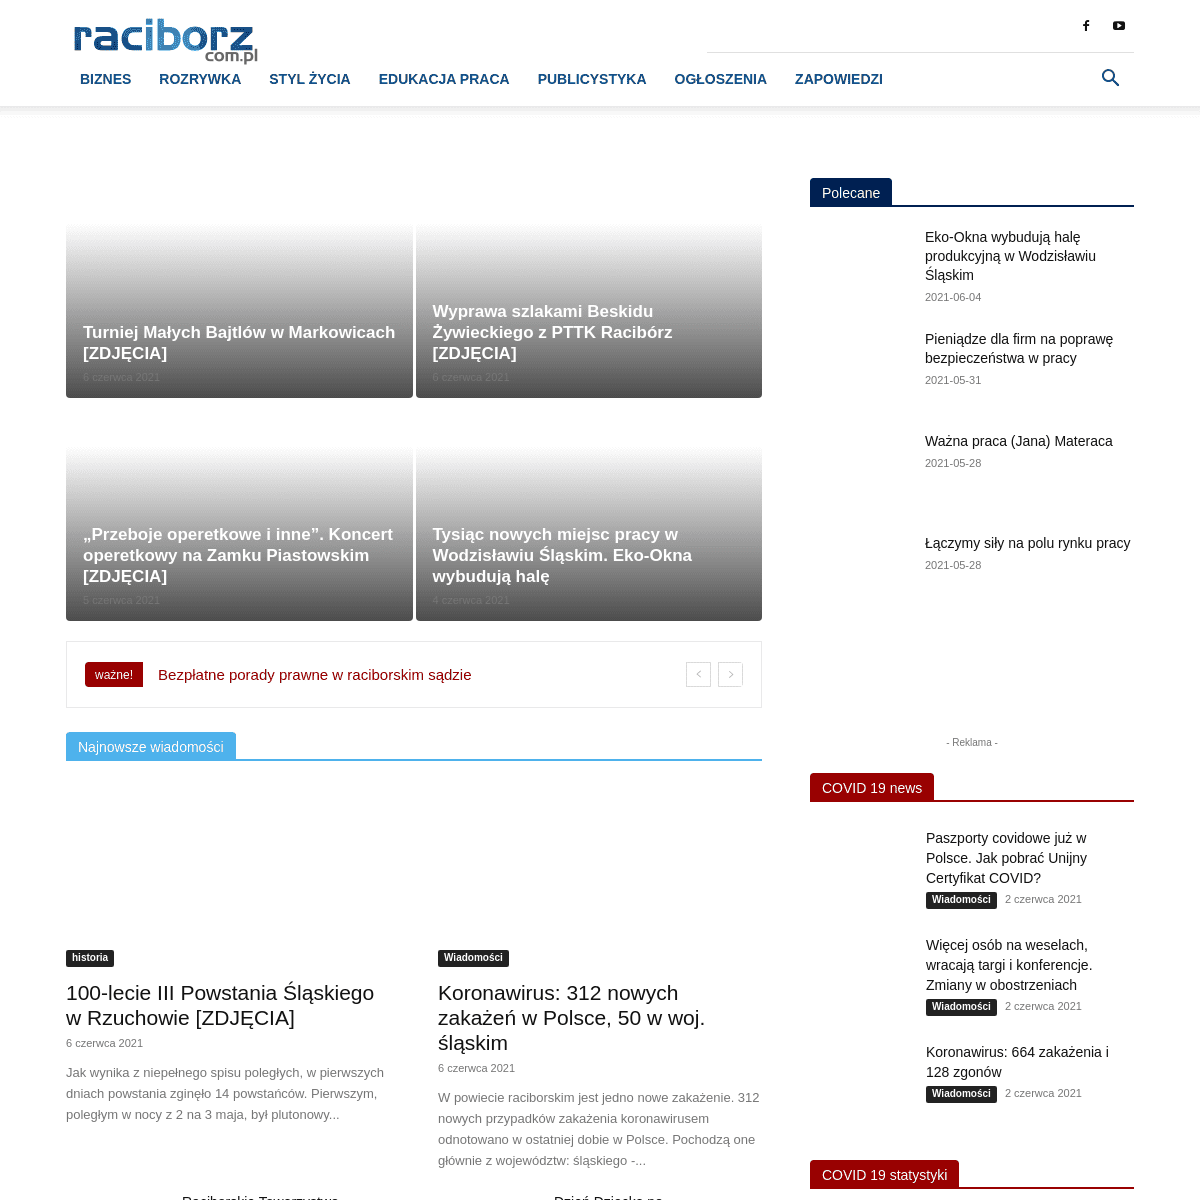 A complete backup of https://raciborz.com.pl